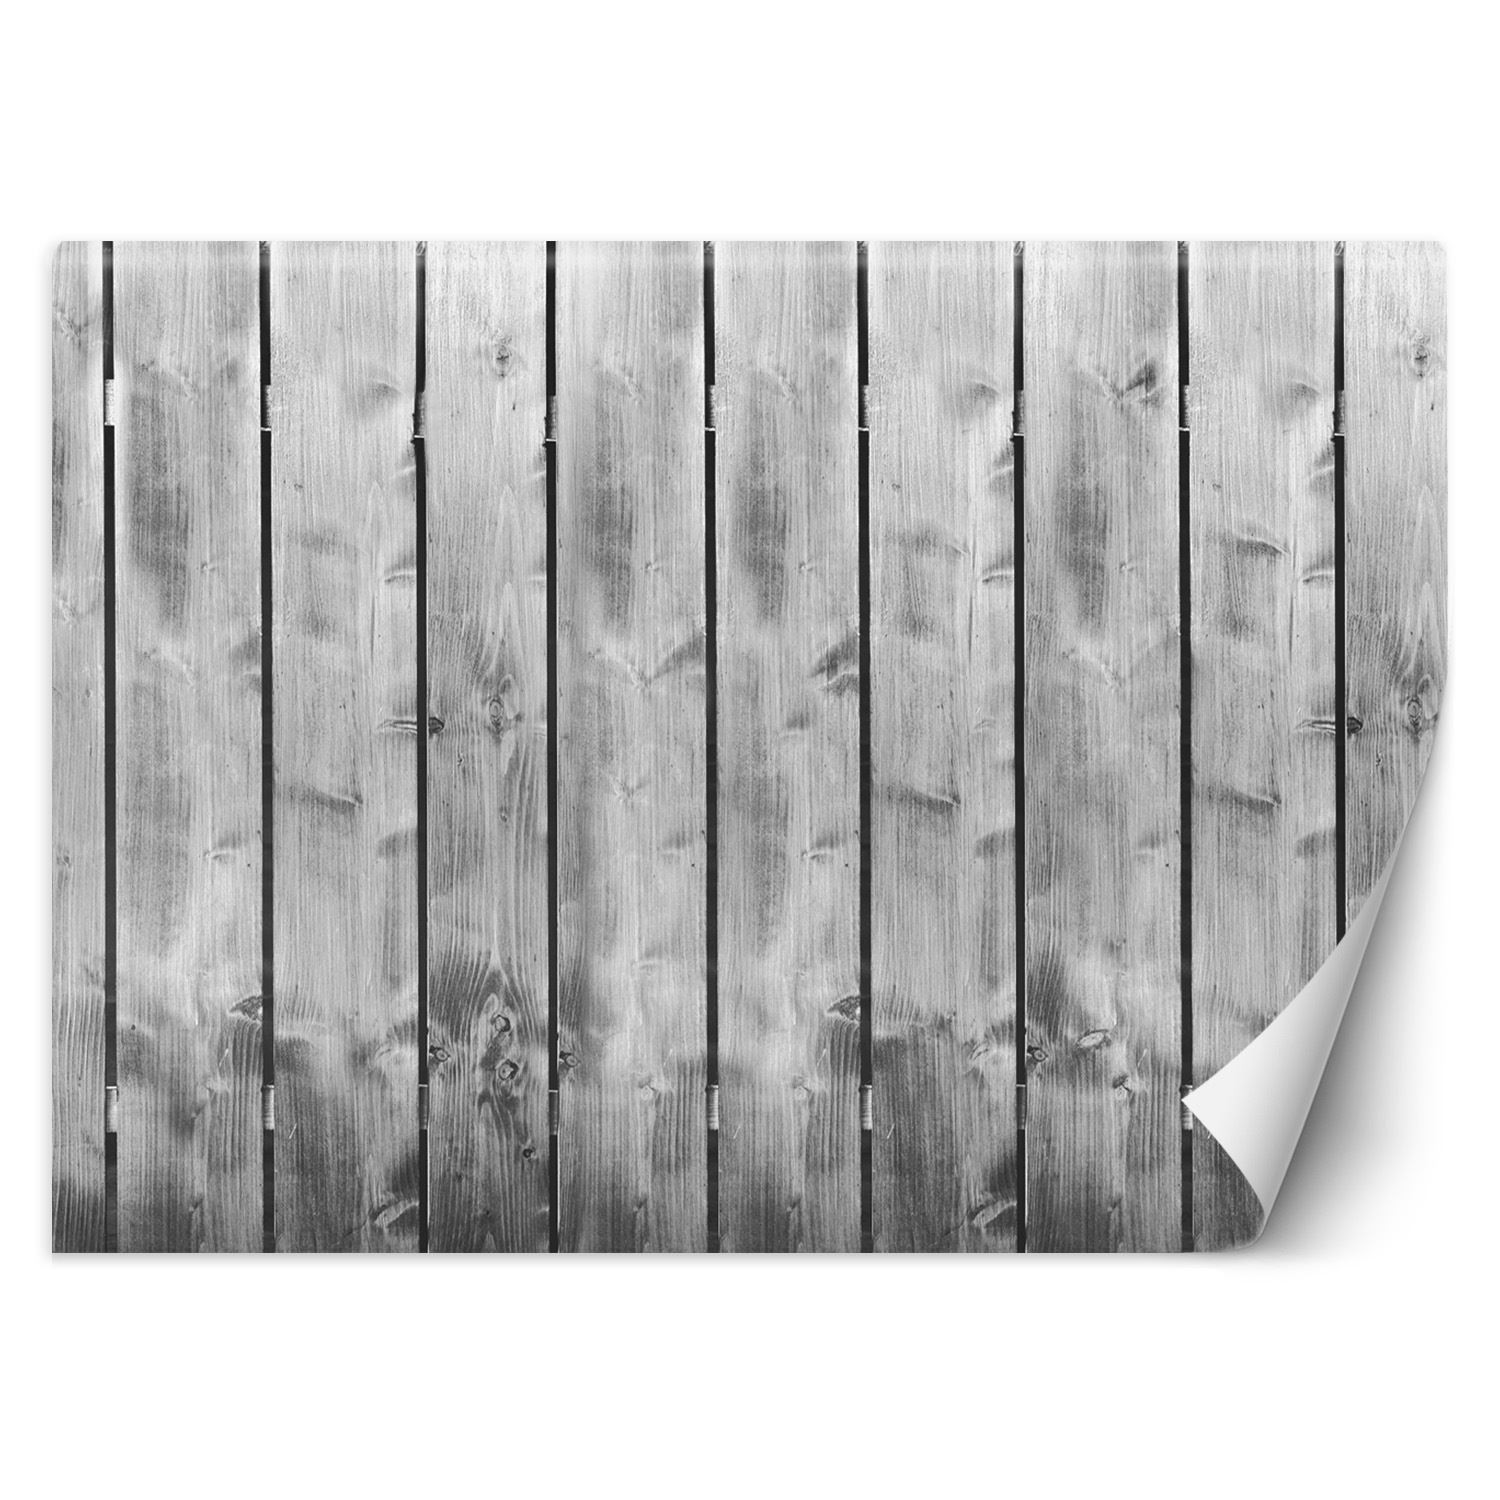 Trend24 – Behang – Bordpatroon – Vliesbehang – Behang Woonkamer – Fotobehang – 350×245 cm – Incl. behanglijm